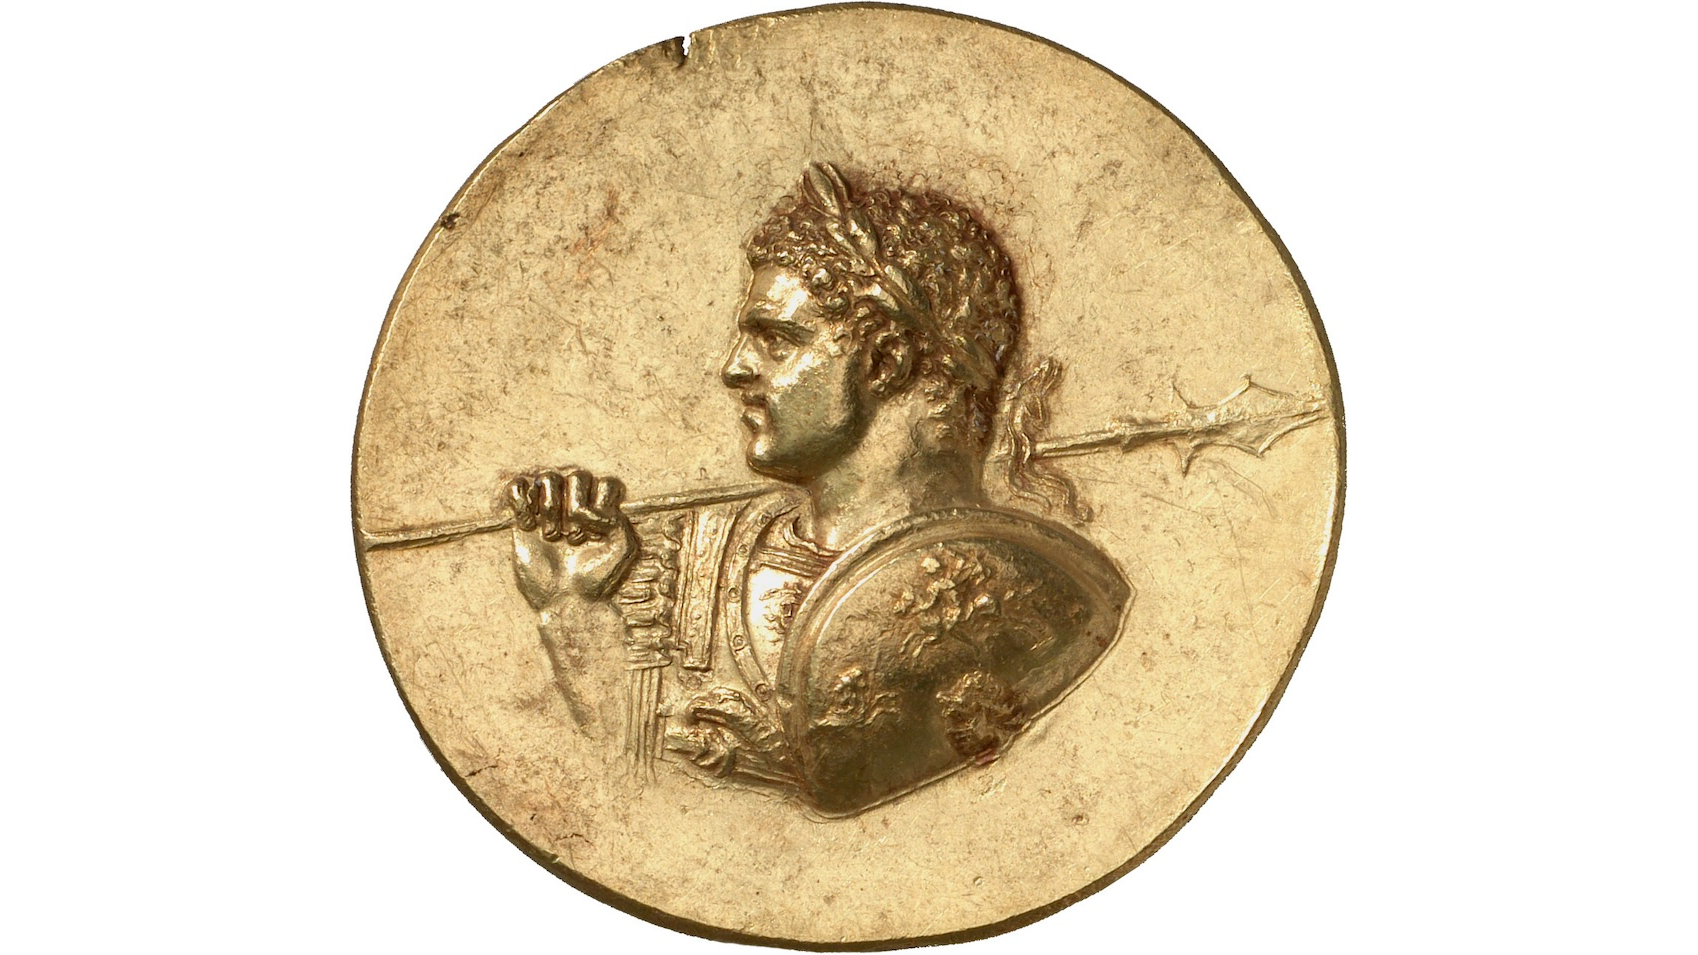 A portrait of a Roman emperor holding a weapon